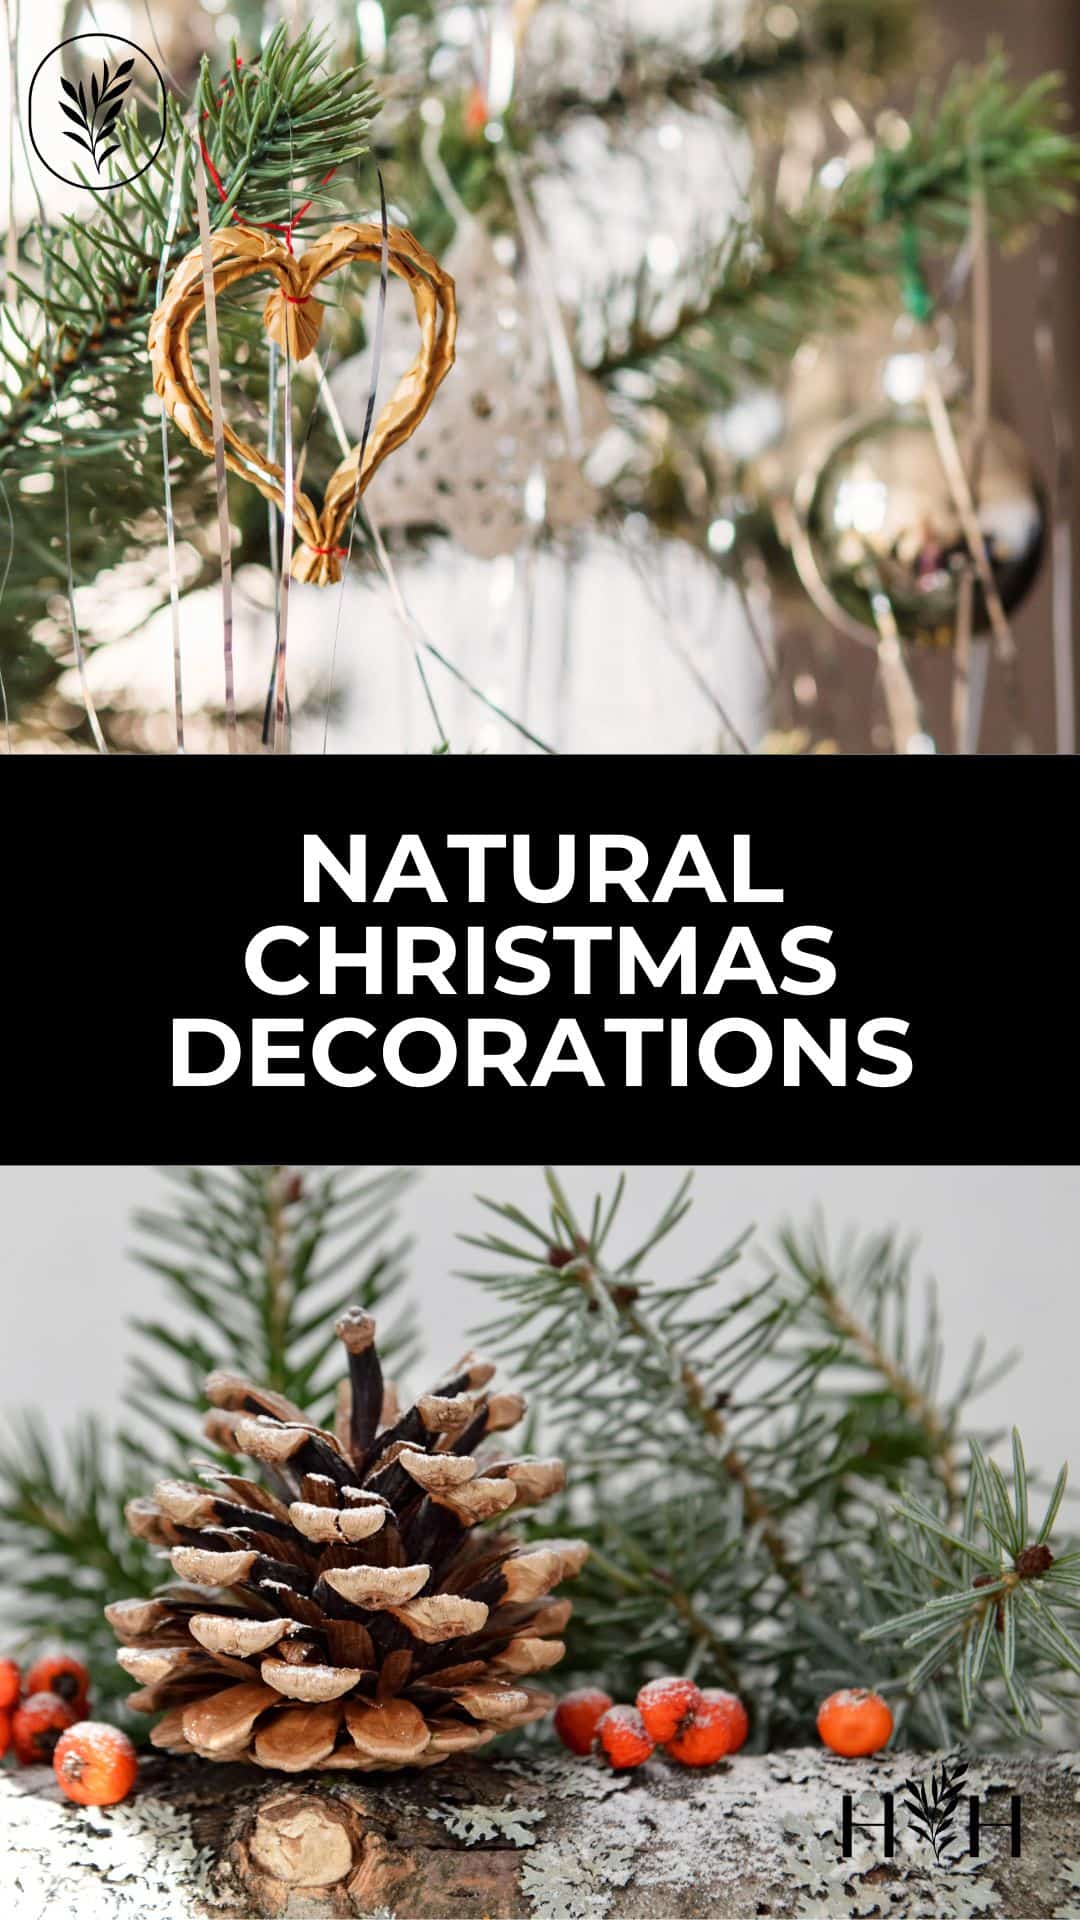 Natural christmas decorations via @home4theharvest